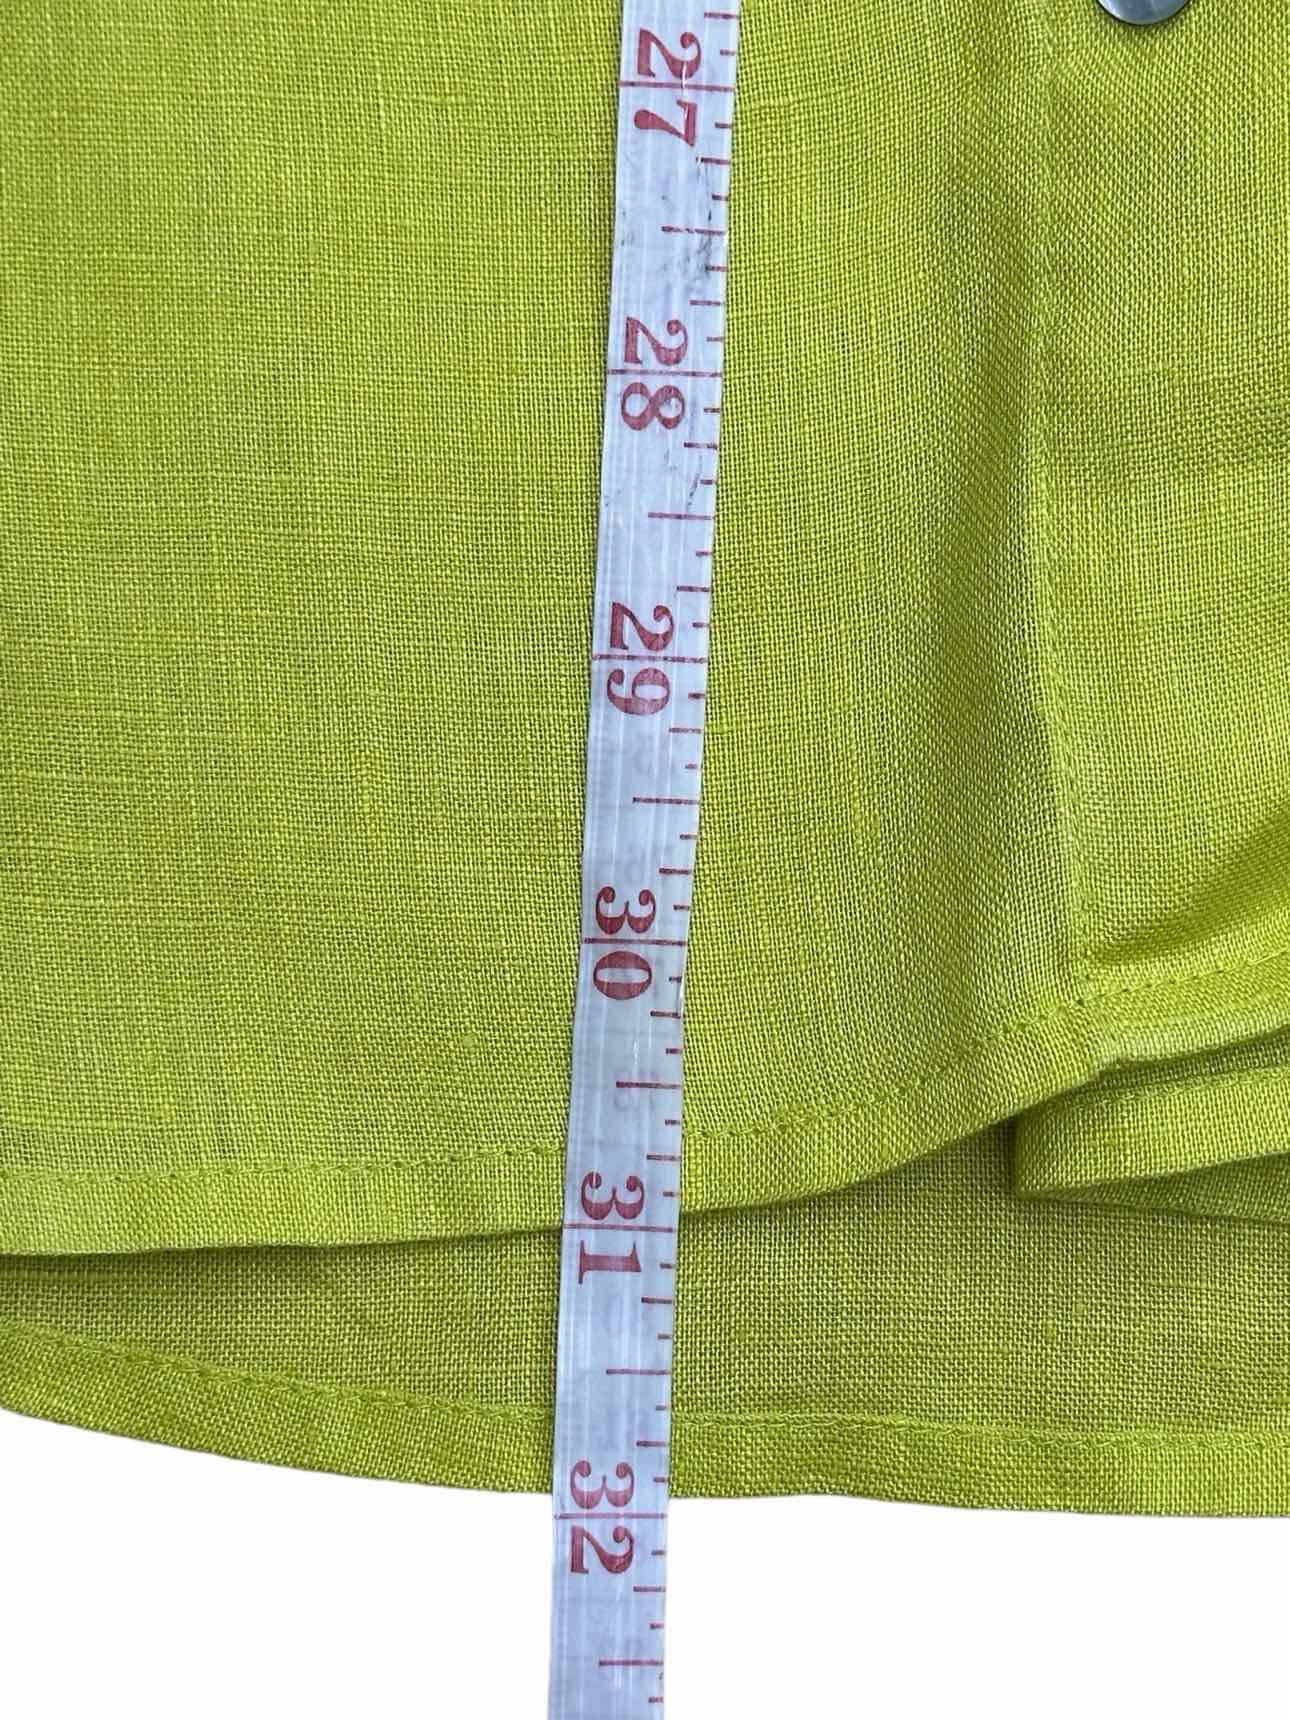 J. Jill NWT Citron 100% Linen Button-down Size XL